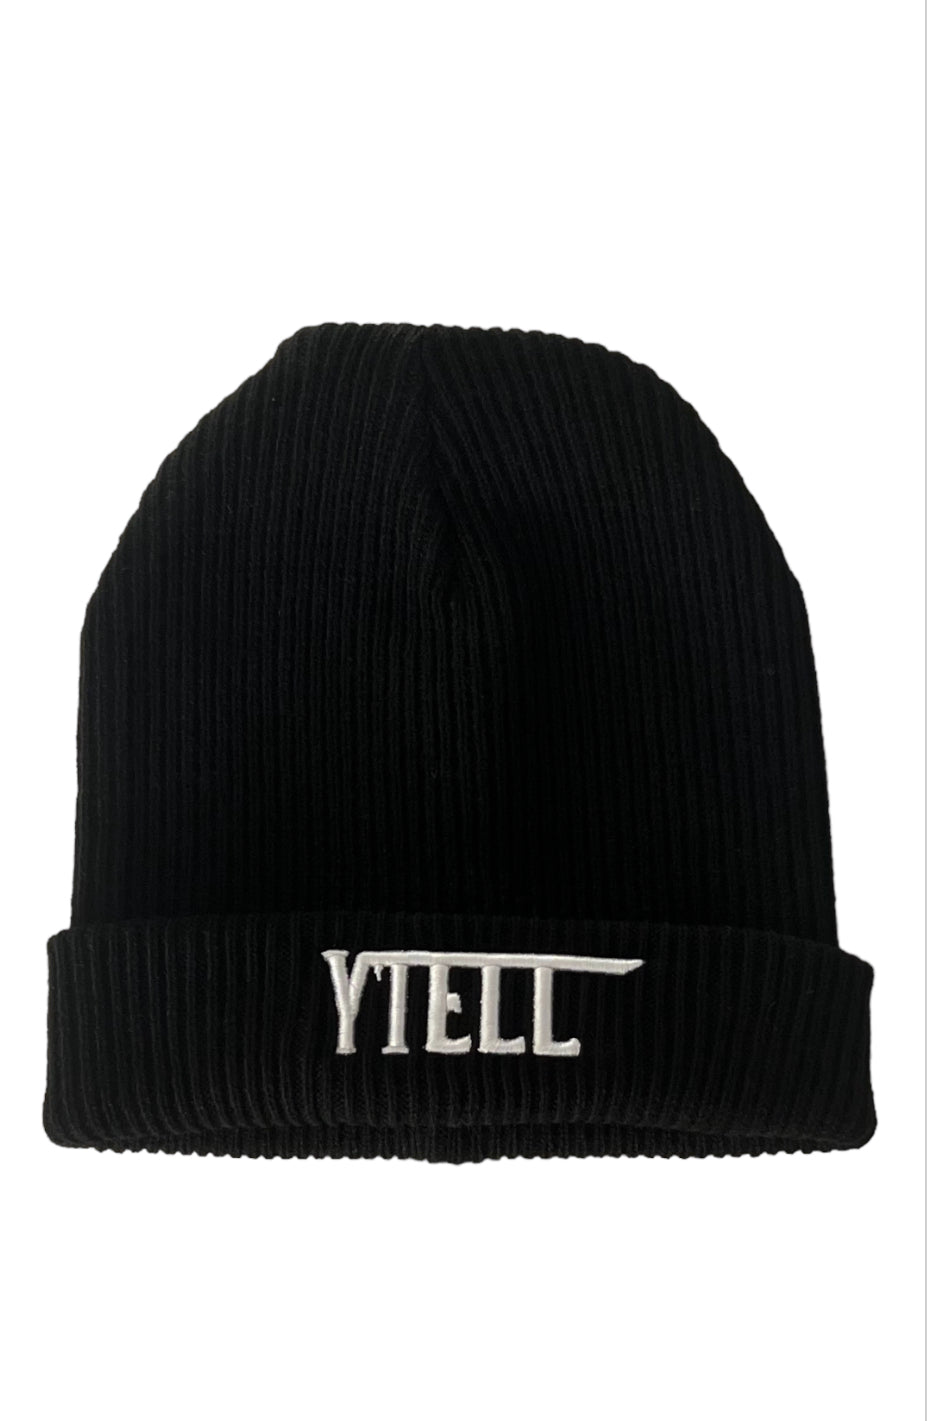 YTELL™ Beanies hats